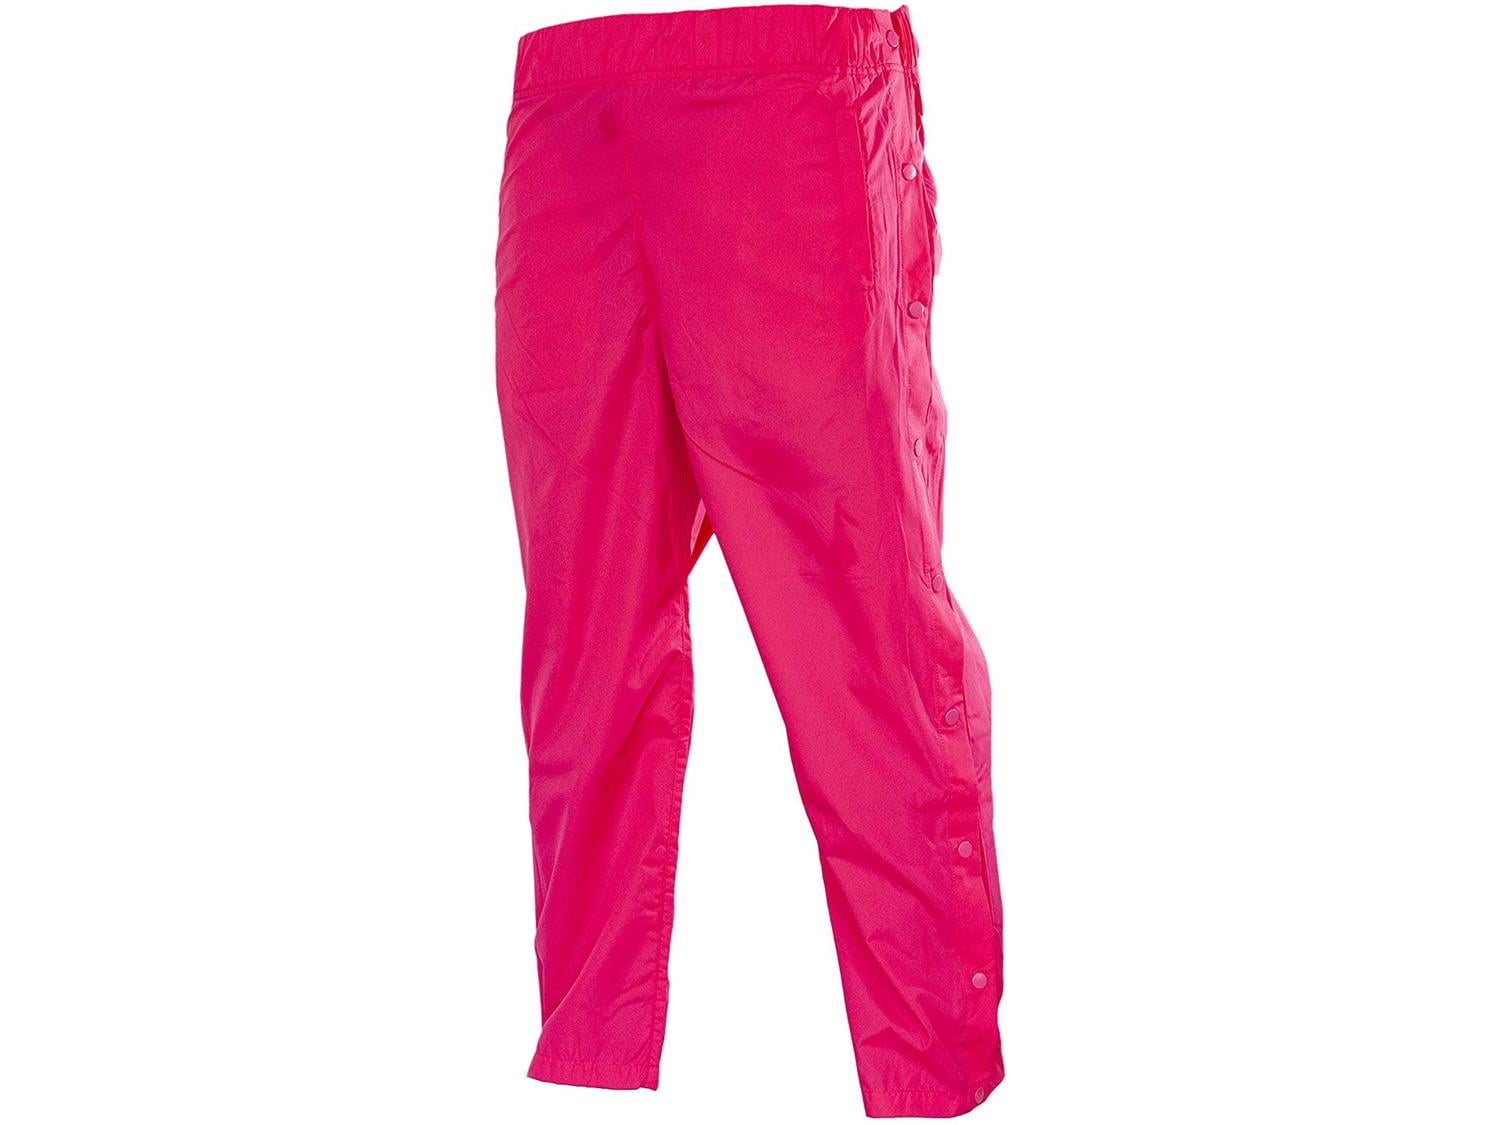 Premium Breakaway Pants Funny Guy Mugs Tearaway Pants Retro Windbreaker Pants